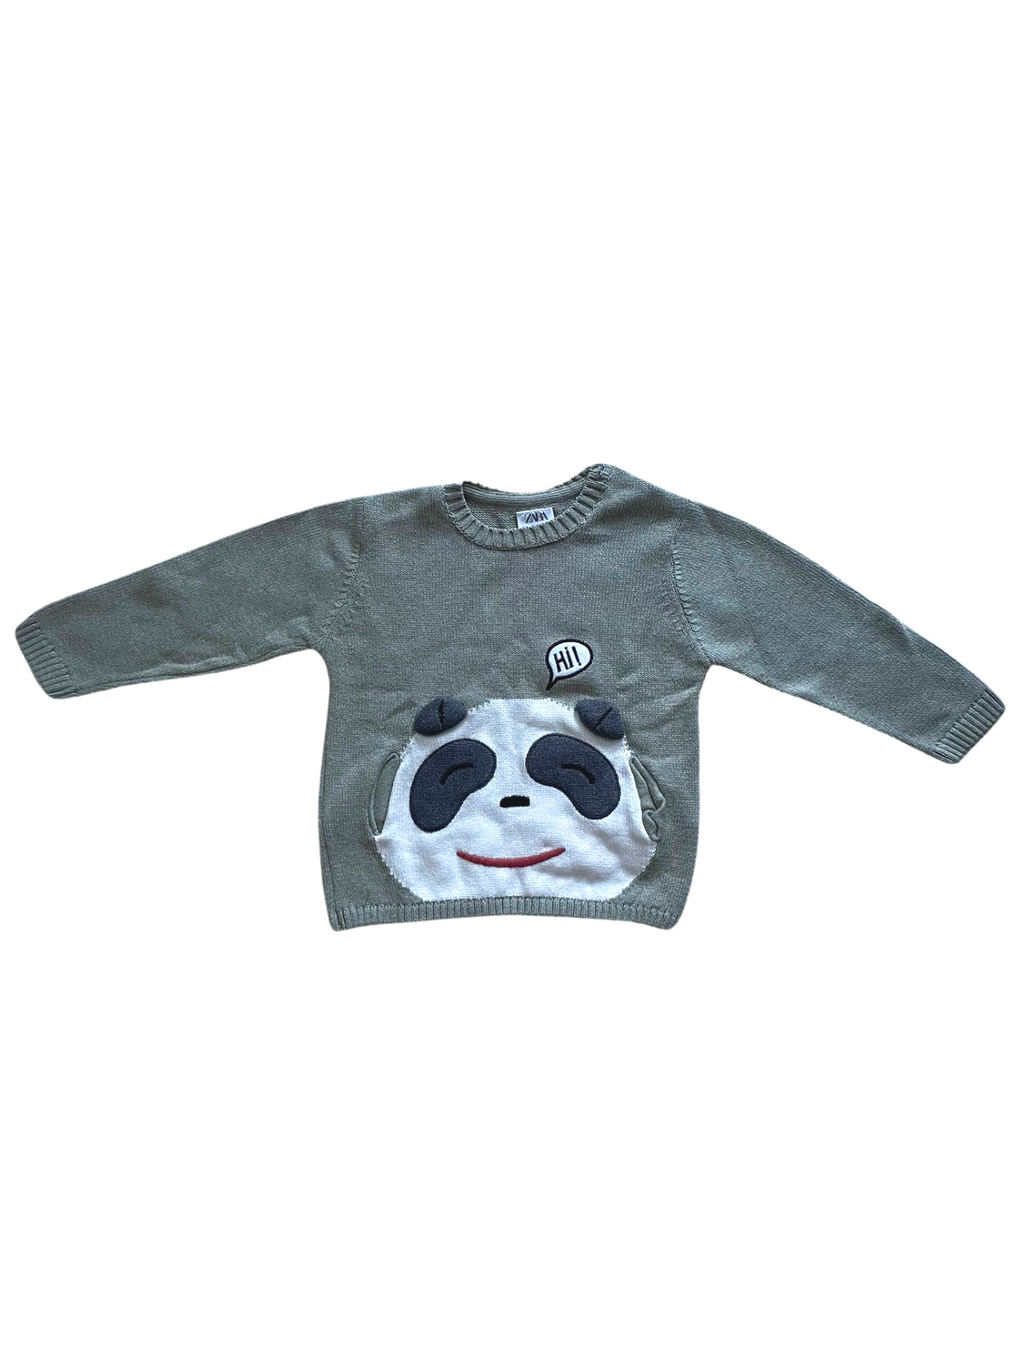 Juniper Sage Panda Unisex Knit Top (Loved)